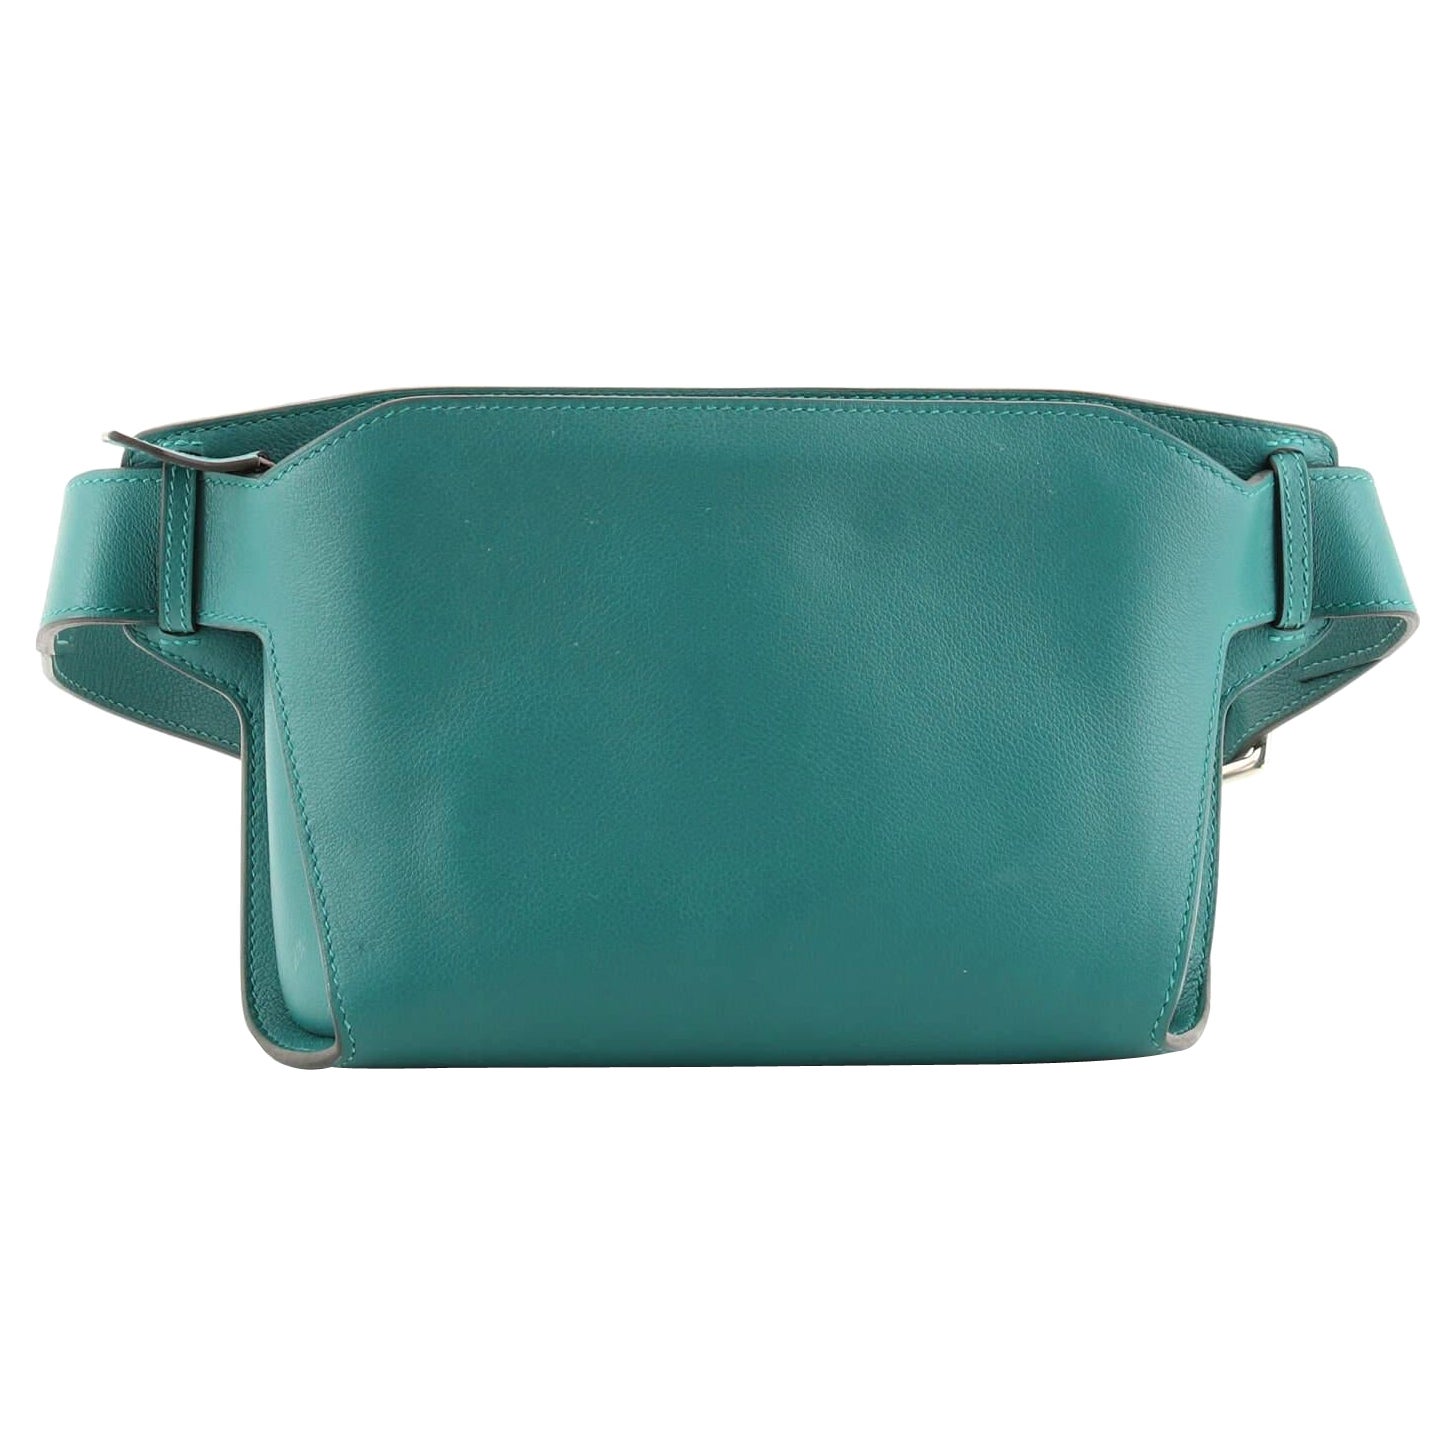 Hermes Cityback Belt Bag Evercolor